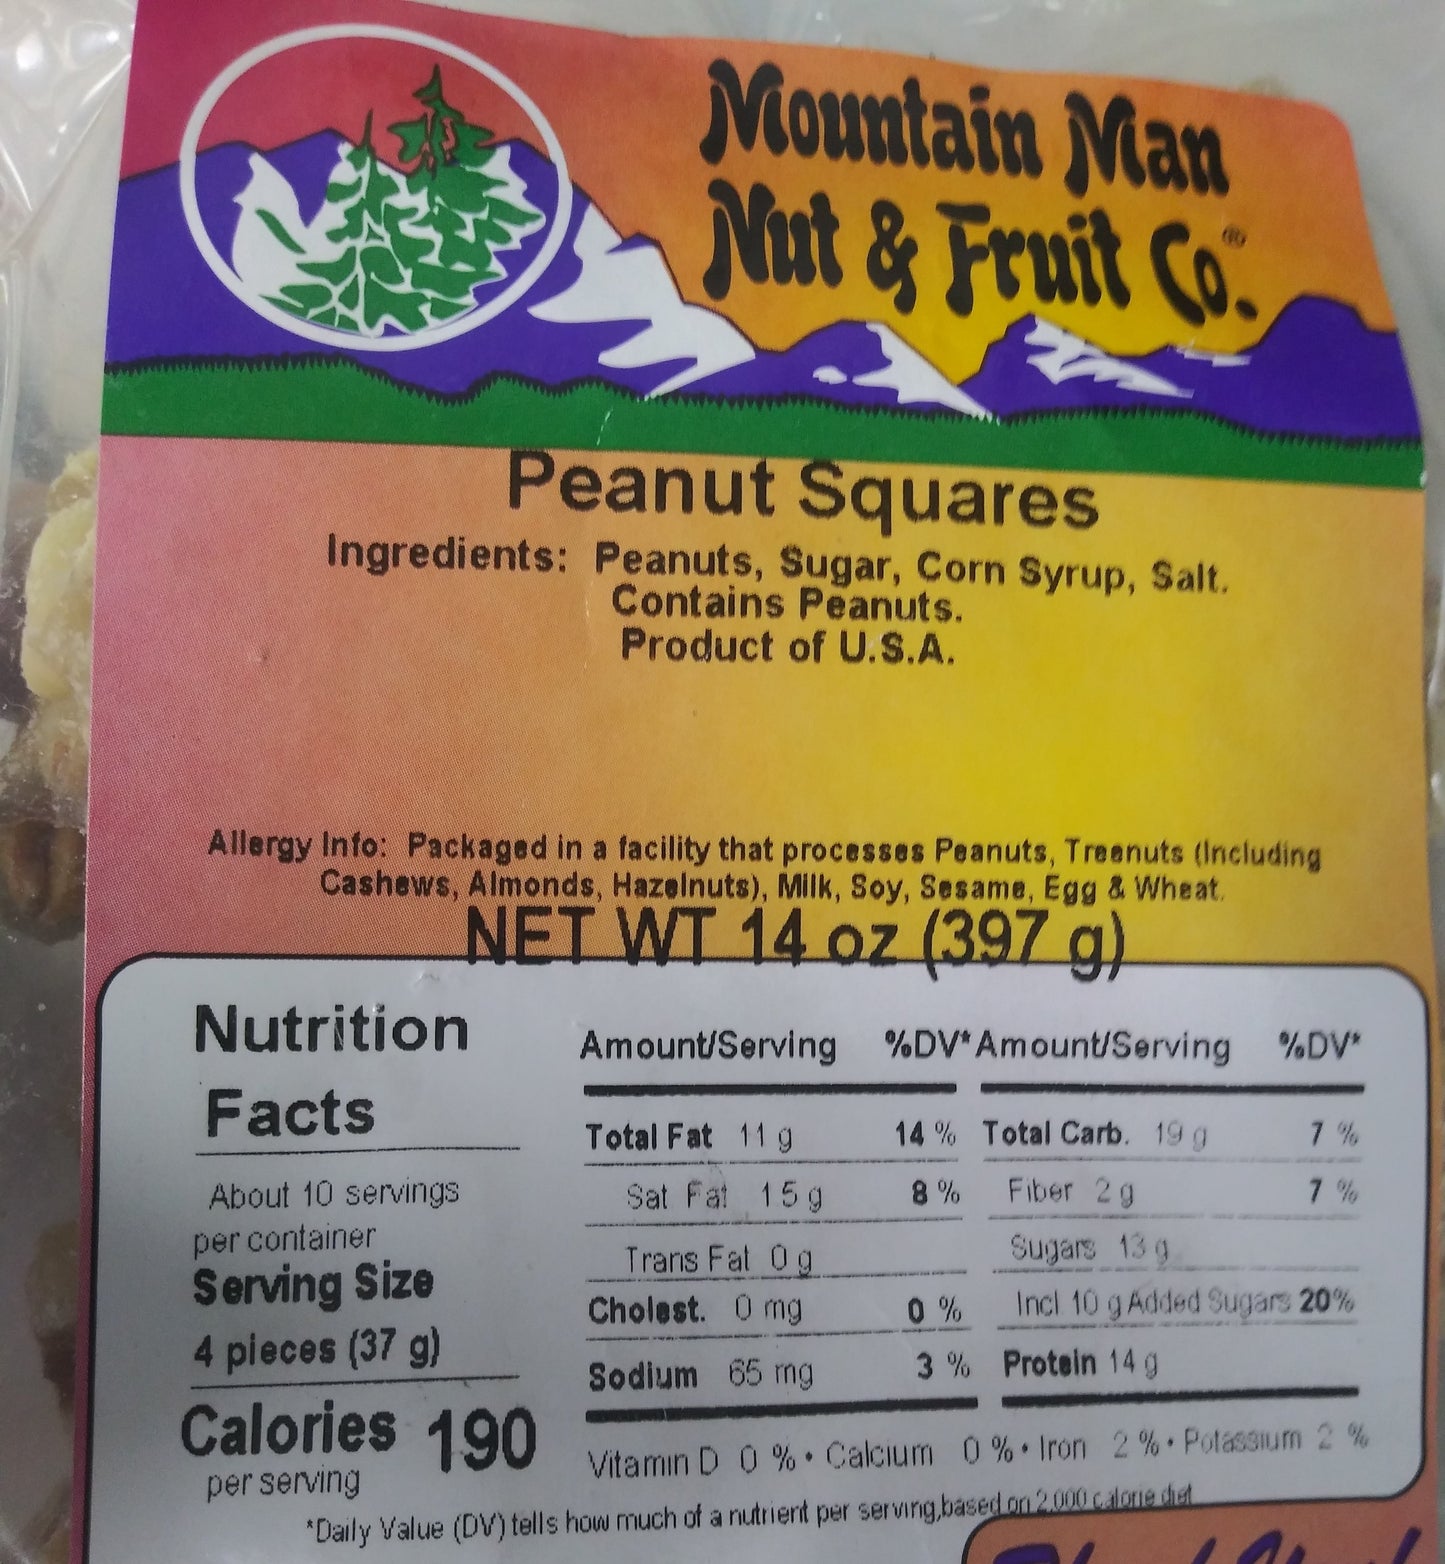 Peanut Squares - Mountain Man Nut & Fruit Co